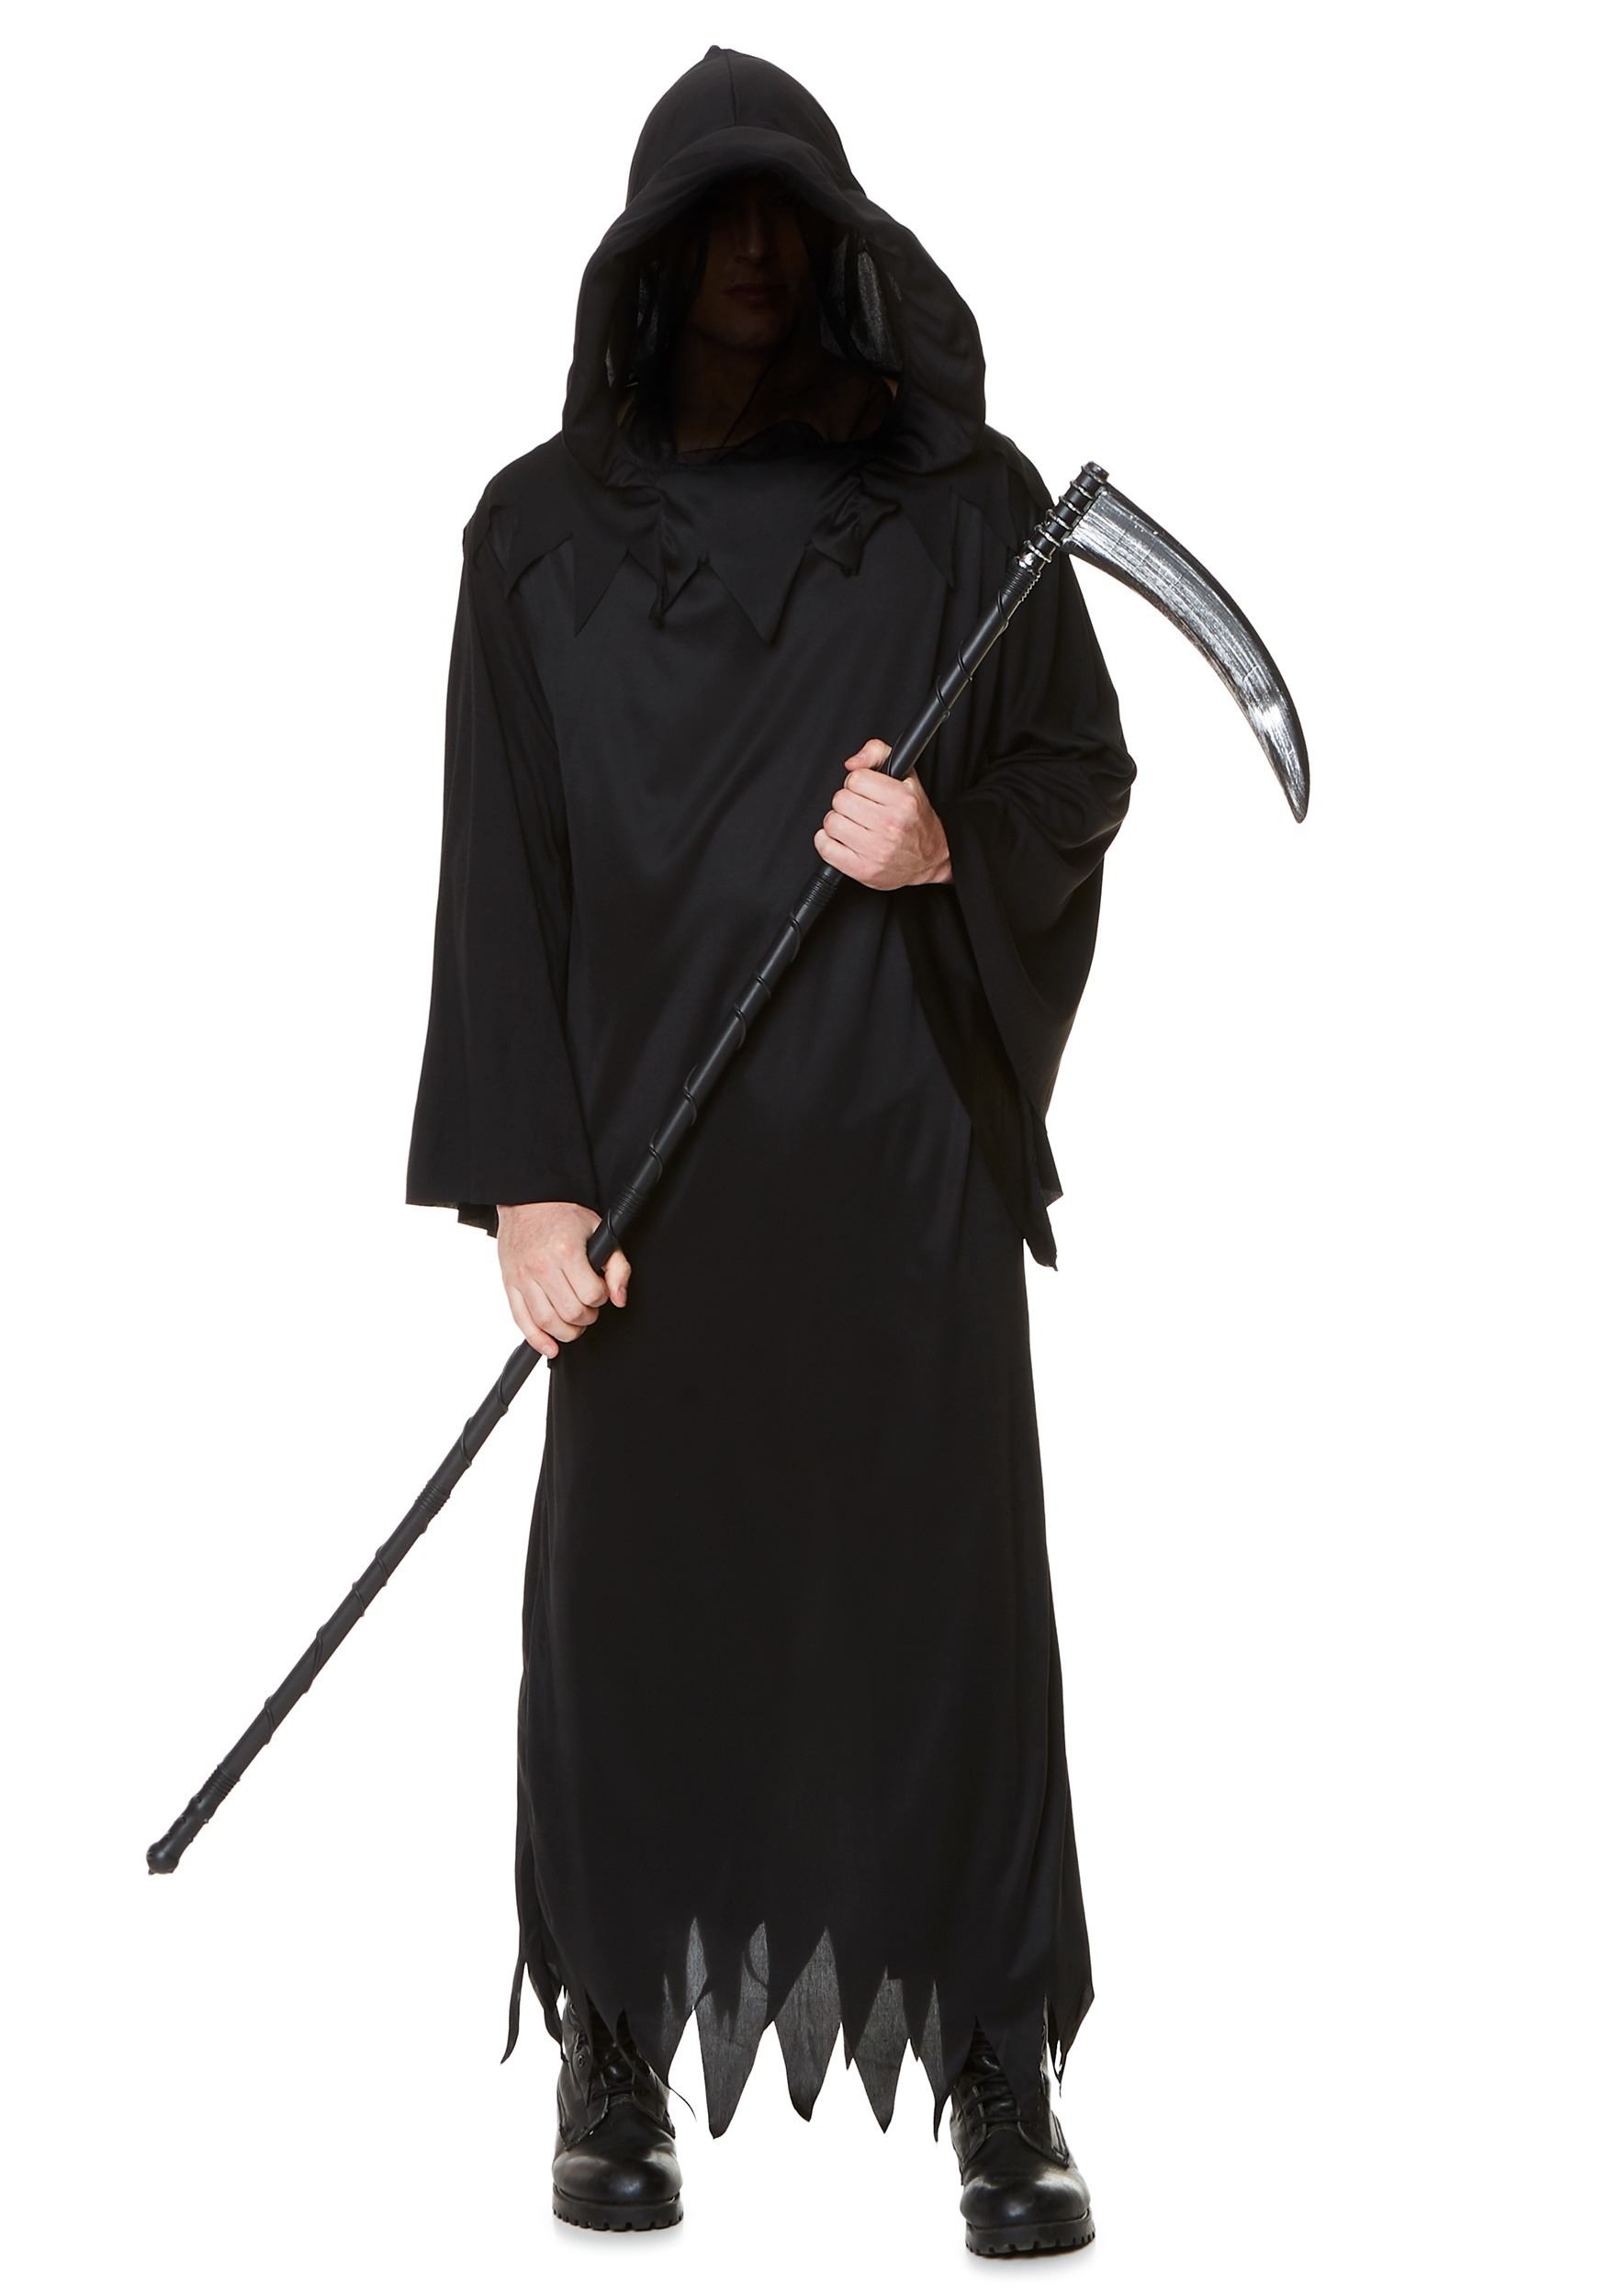 Grim Reaper Fancy Dress Costume For Men